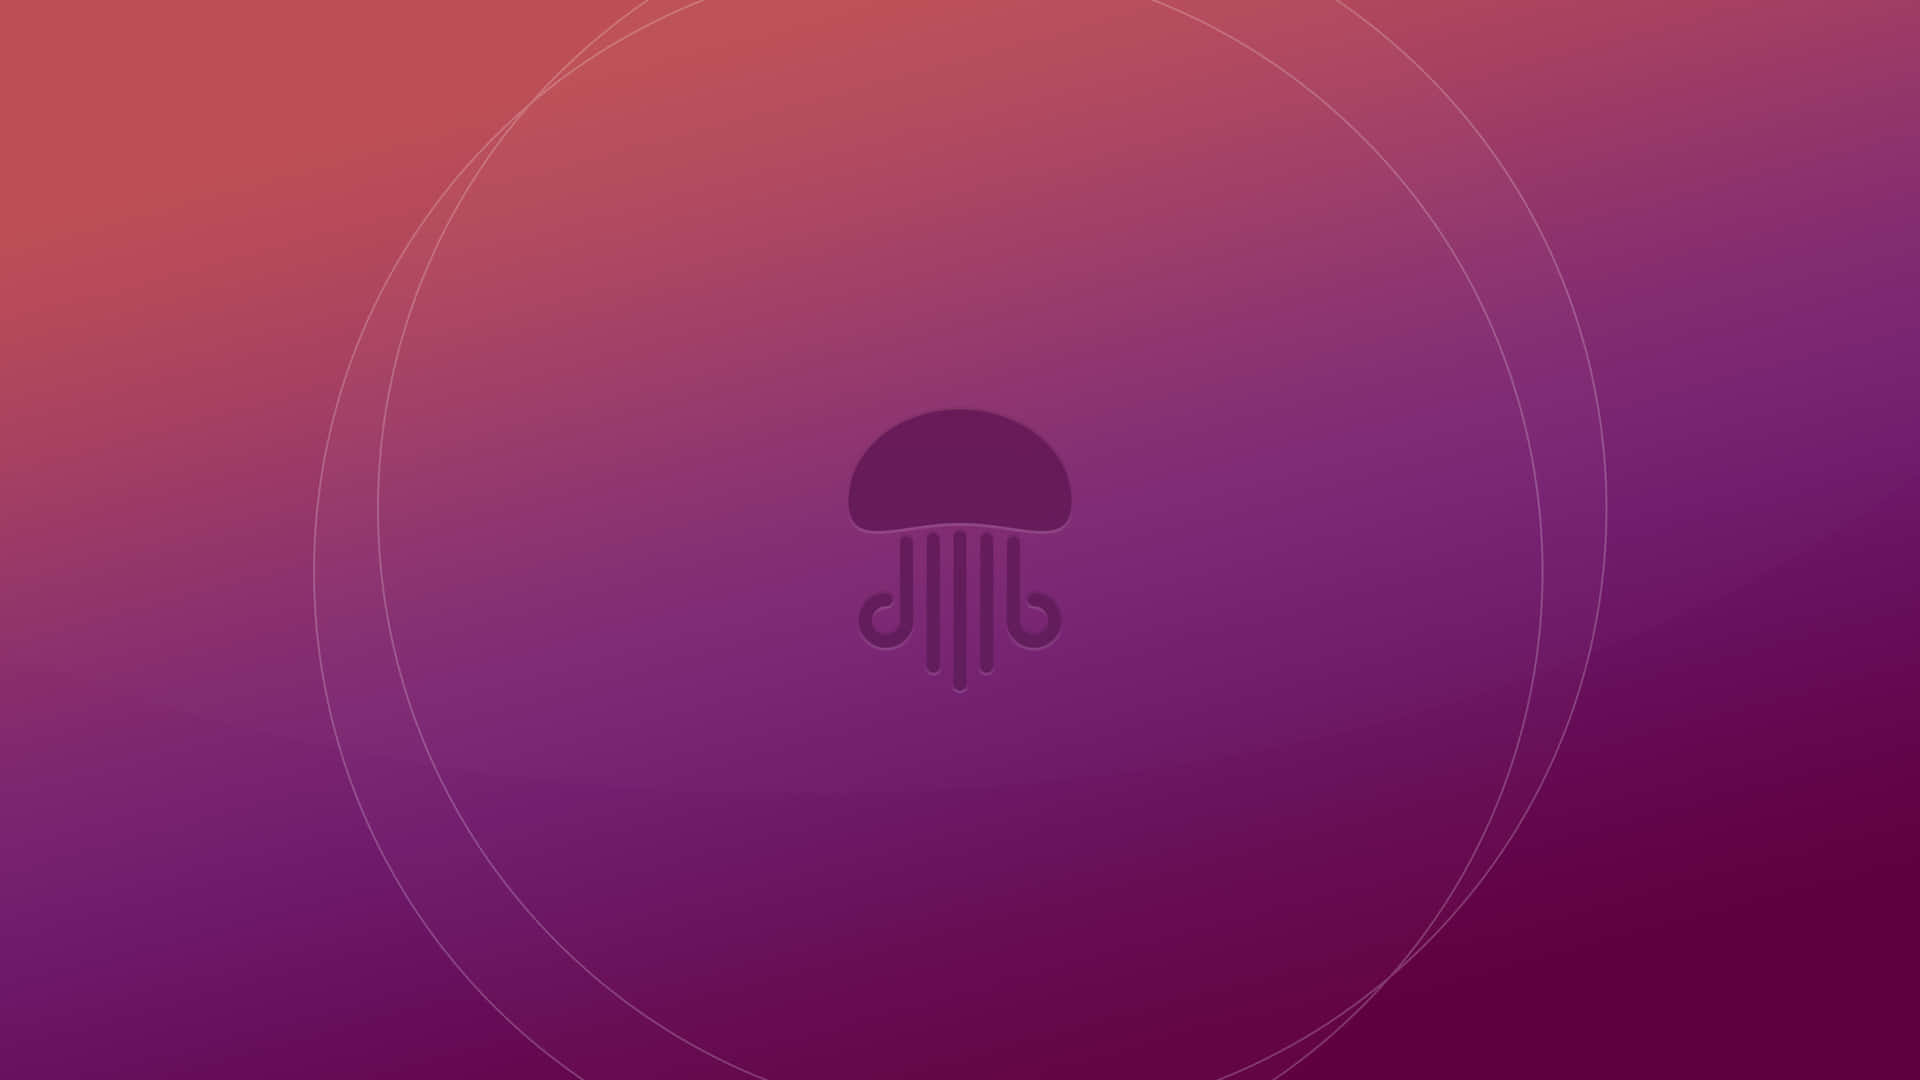 Ubuntu 4K: the modern operating system on a bold, ultra-modern interface Wallpaper